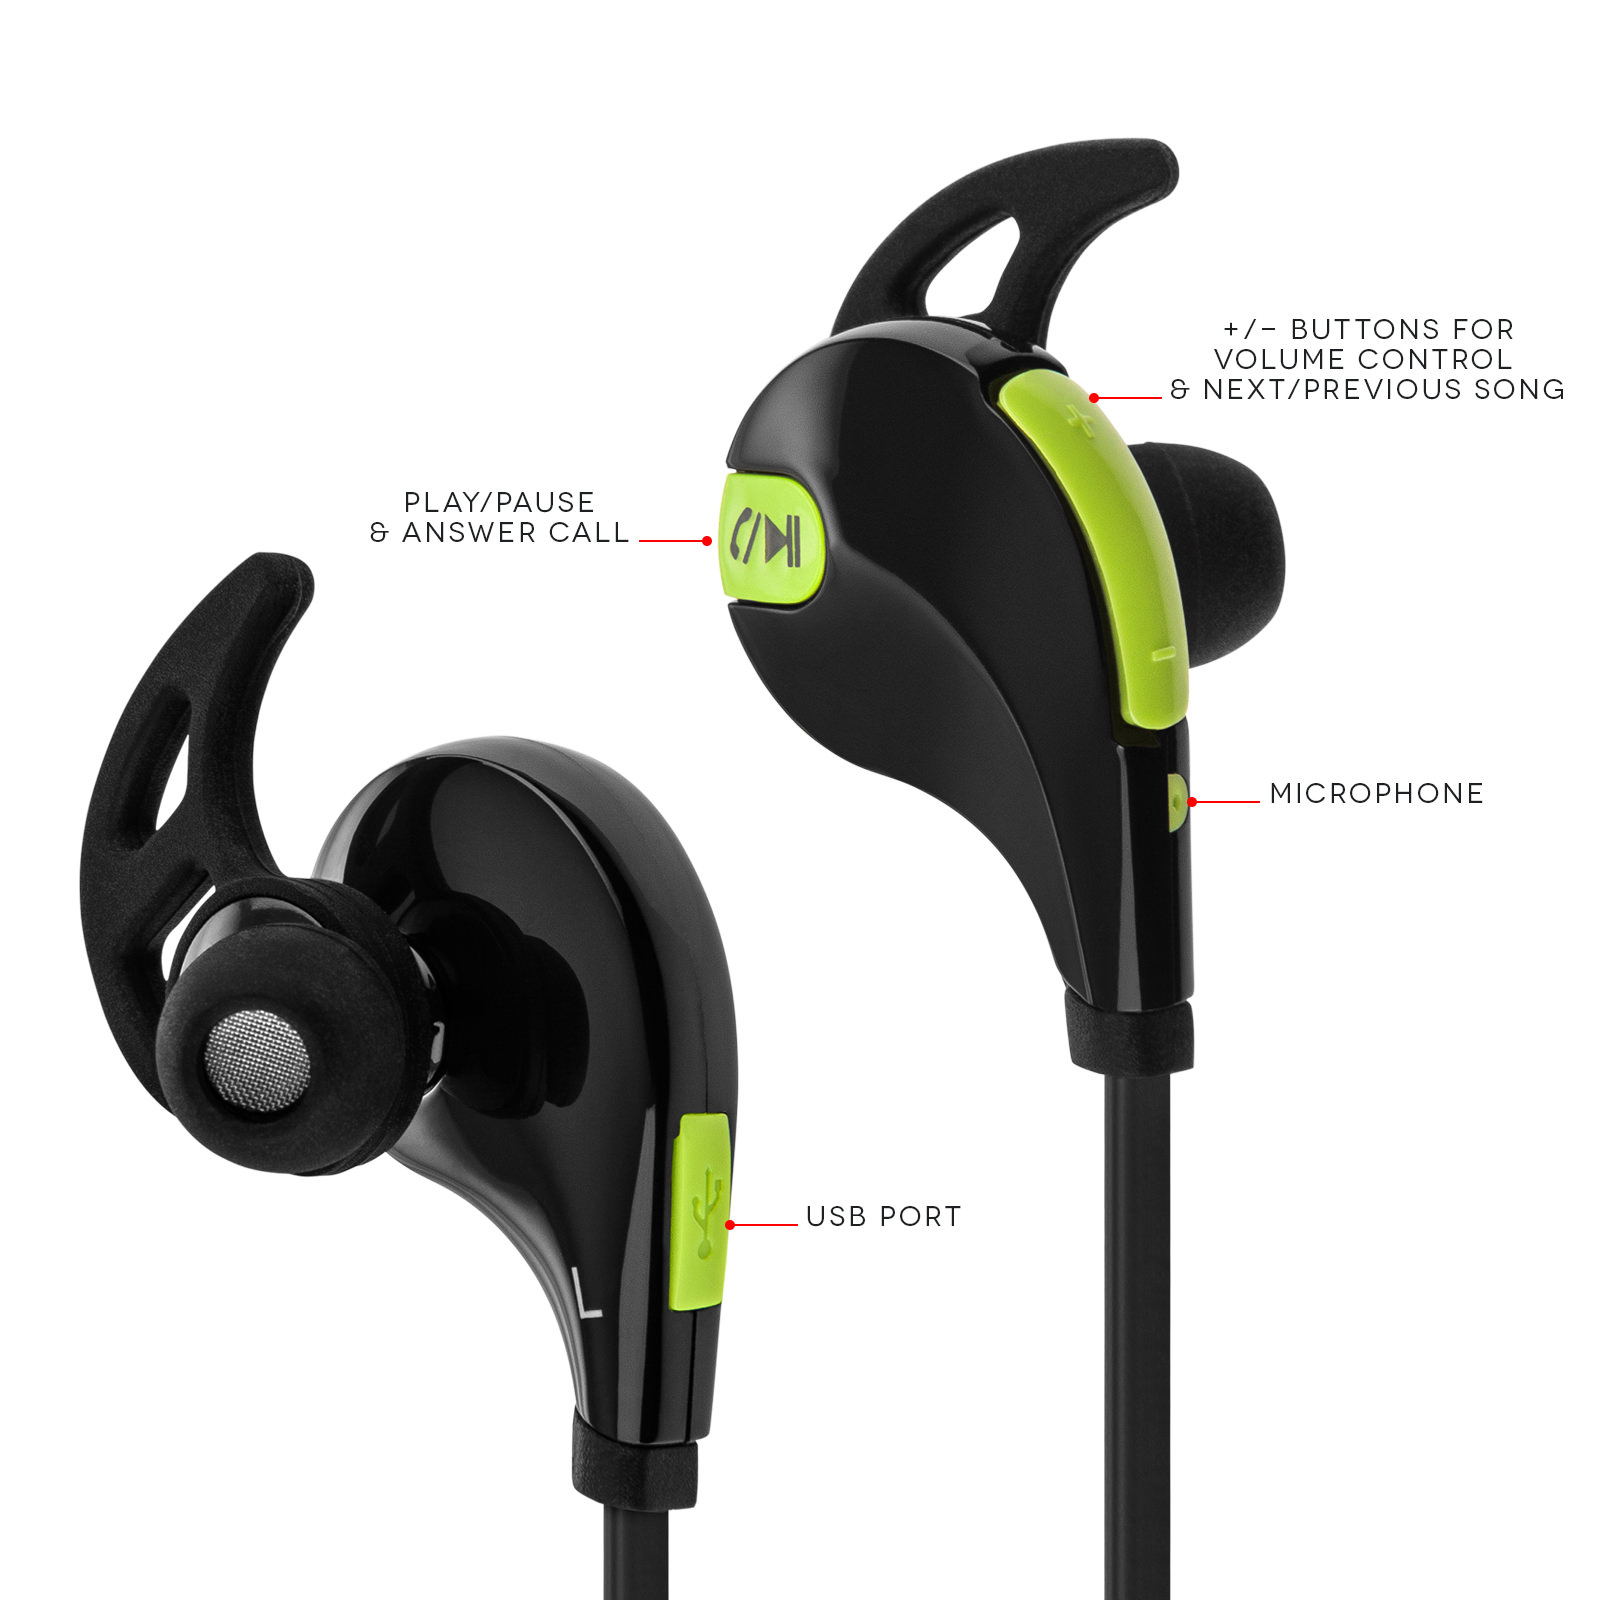 Audiance Wireless Bluetooth V 4.0 Sports Headphone -Black / Green